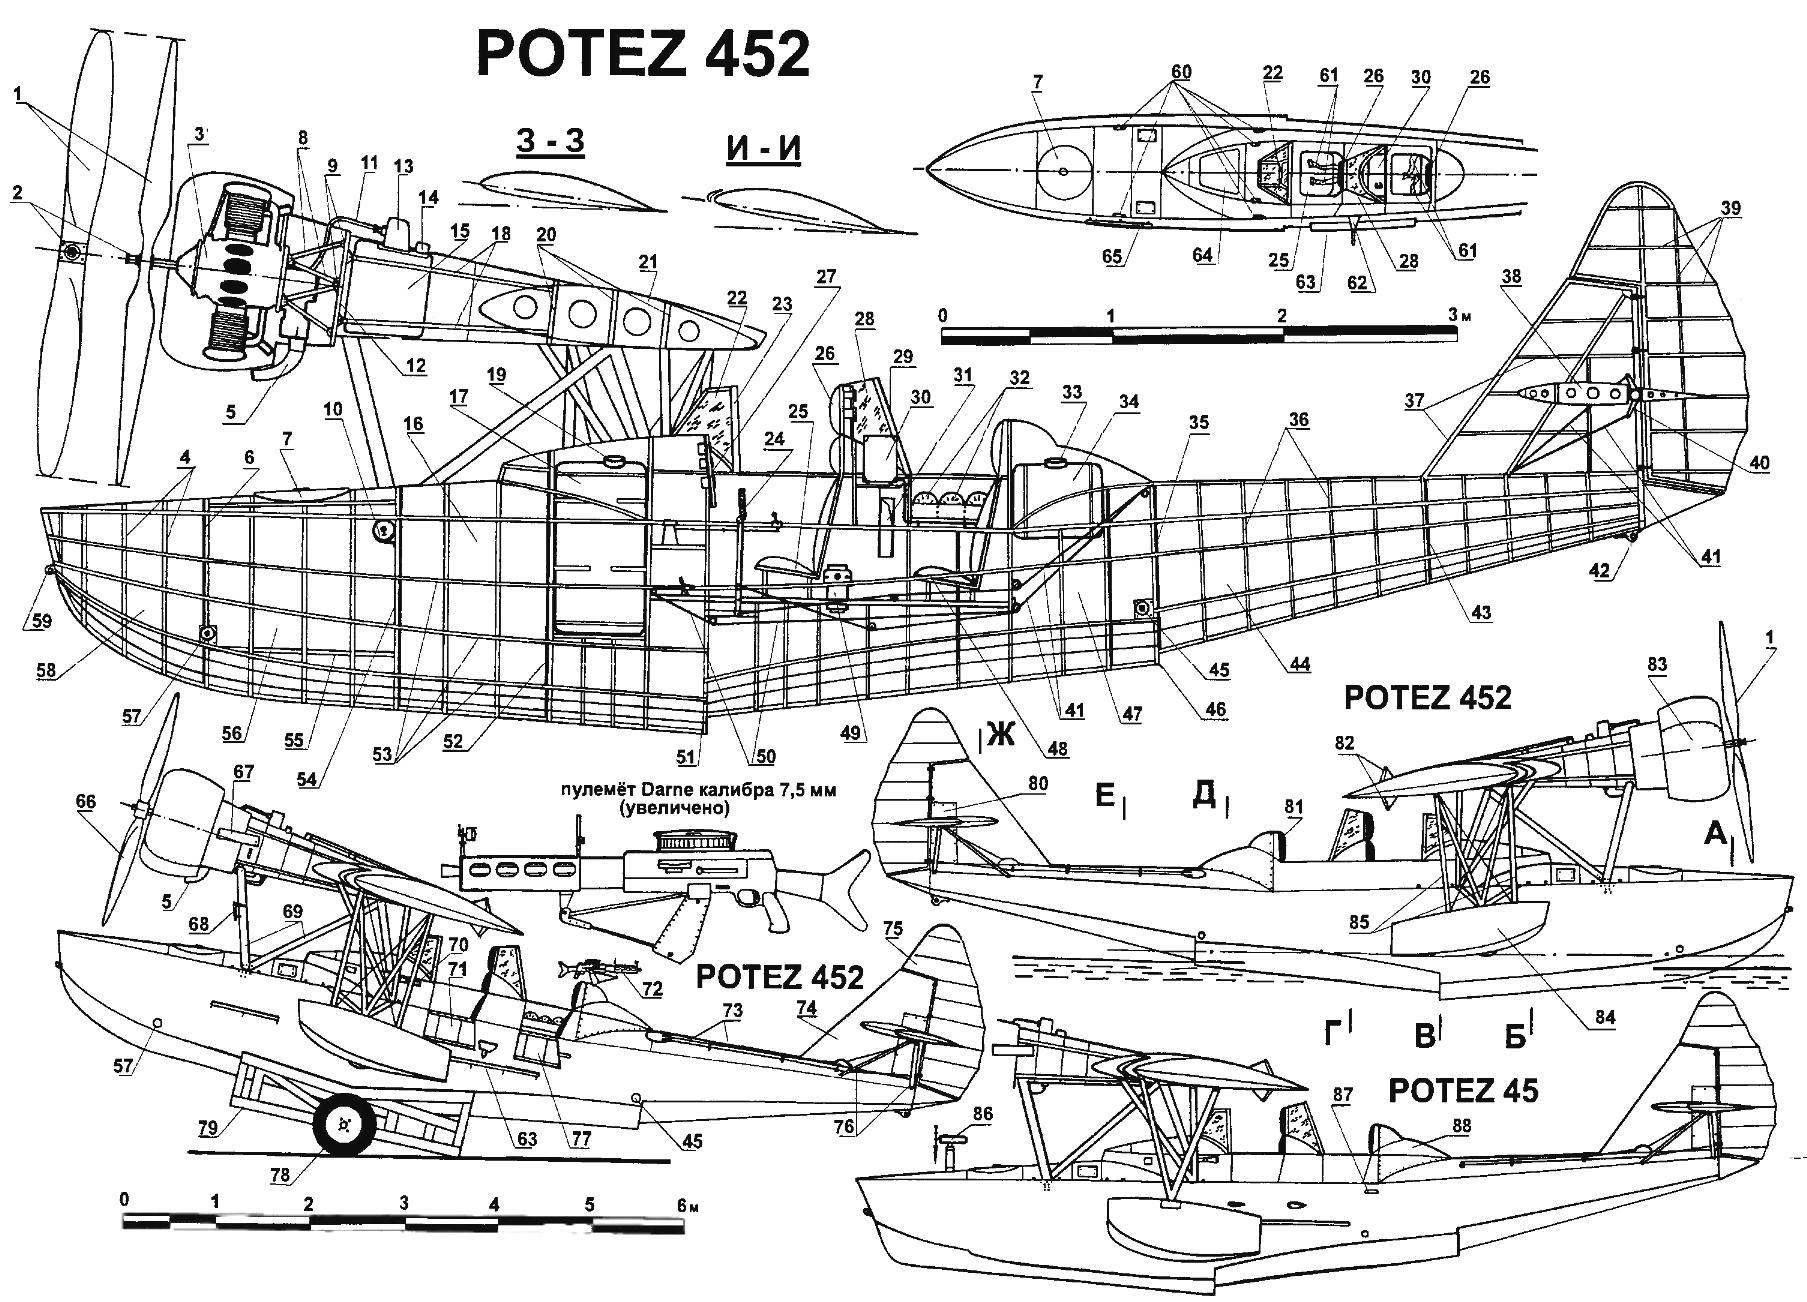 Flying boat POTEZ 452